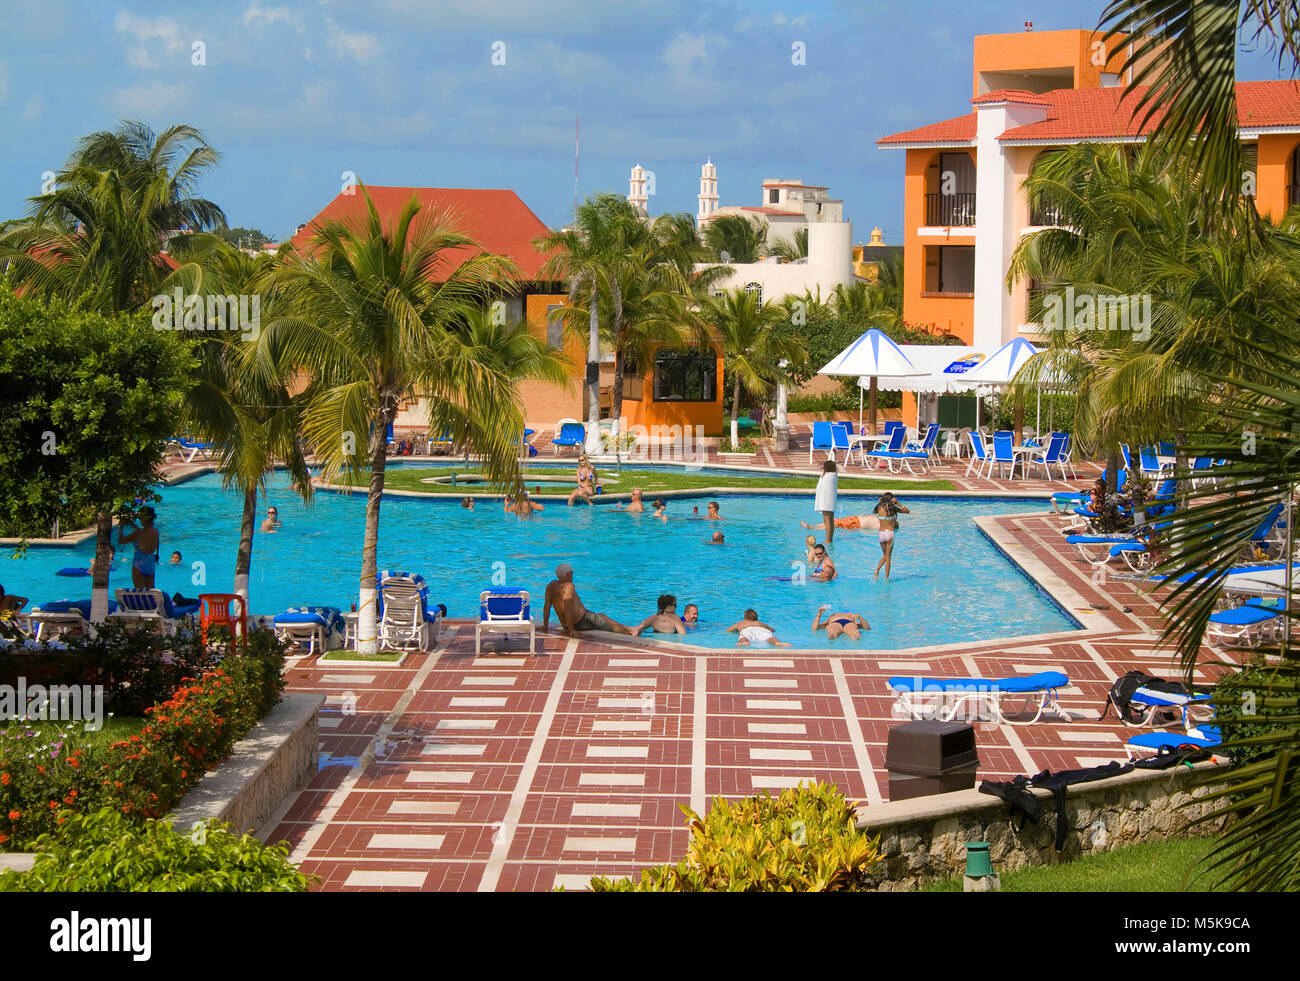 Pool-Landschaft im Hotel Cozumel, Cozumel, Mexiko, Karibik | Pool at Hotel Cozumel, Cozumel, Mexico, Caribbean Stock Photo